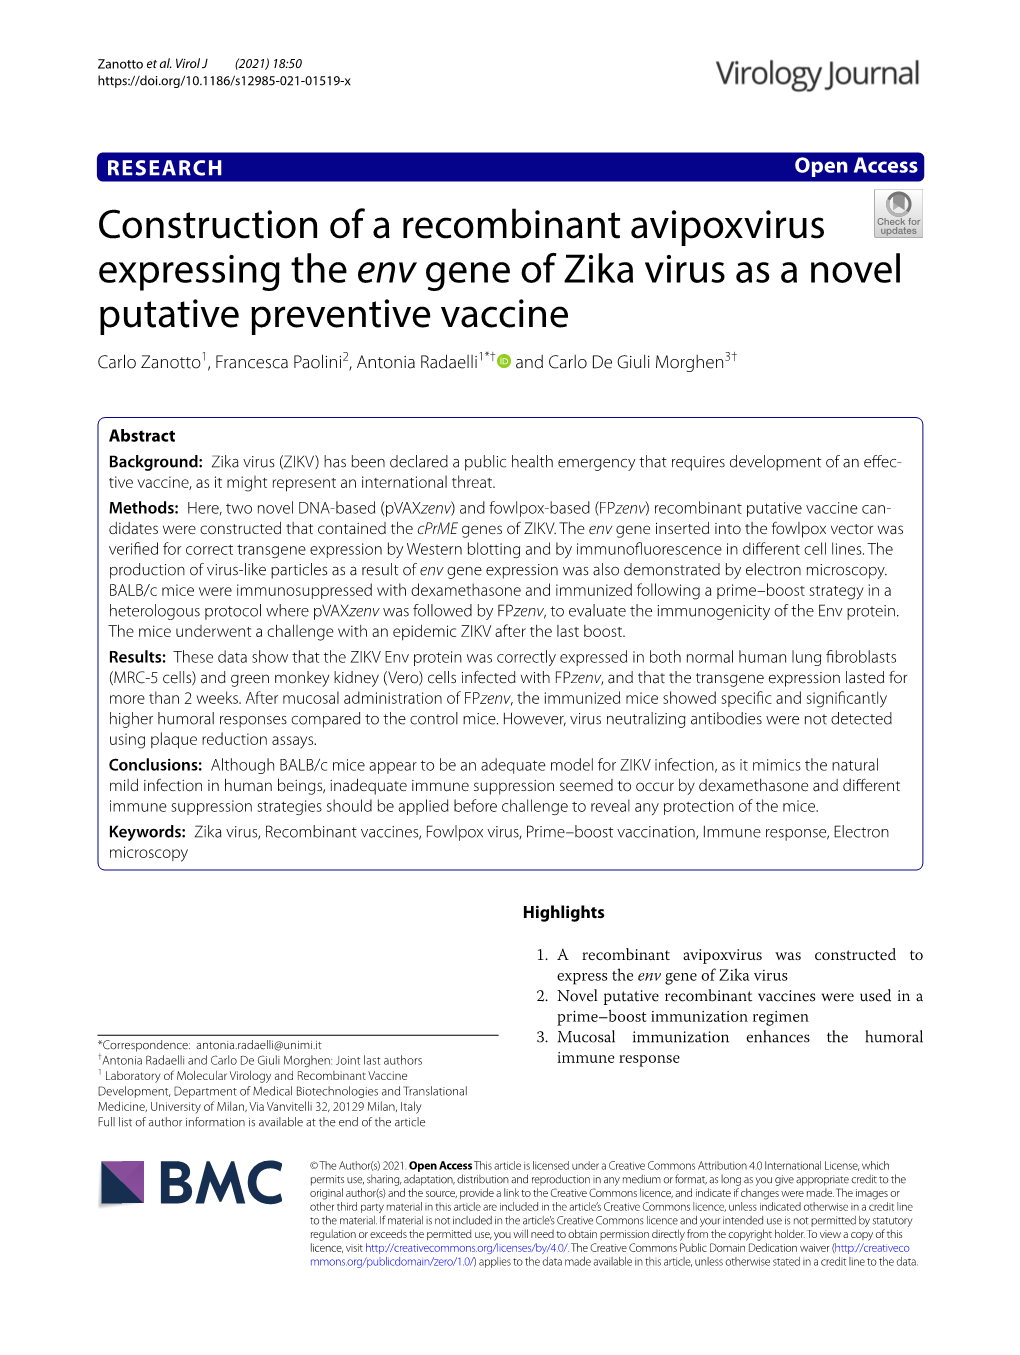 Construction of a Recombinant Avipoxvirus Expressing